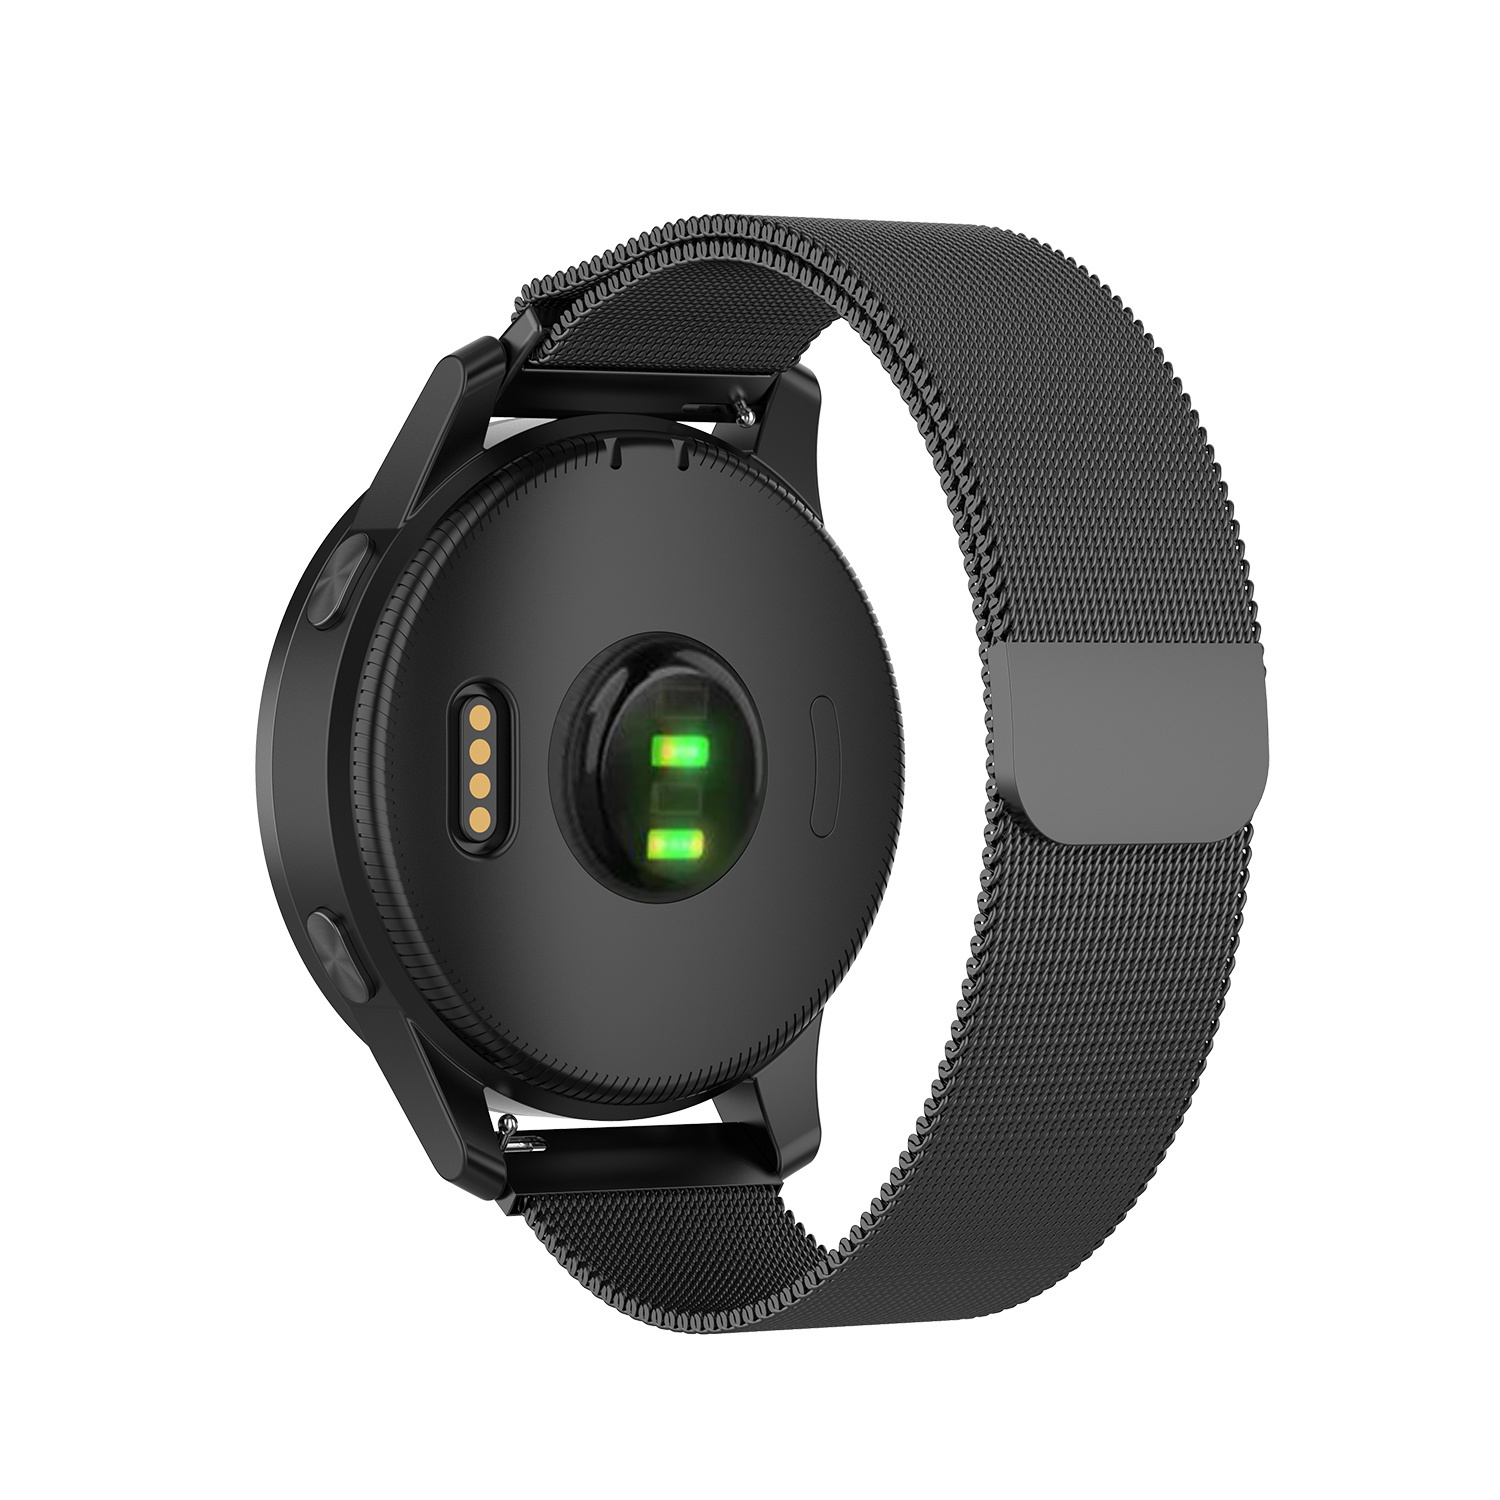 Cinturino loop in maglia milanese per Huawei Watch GT - nero